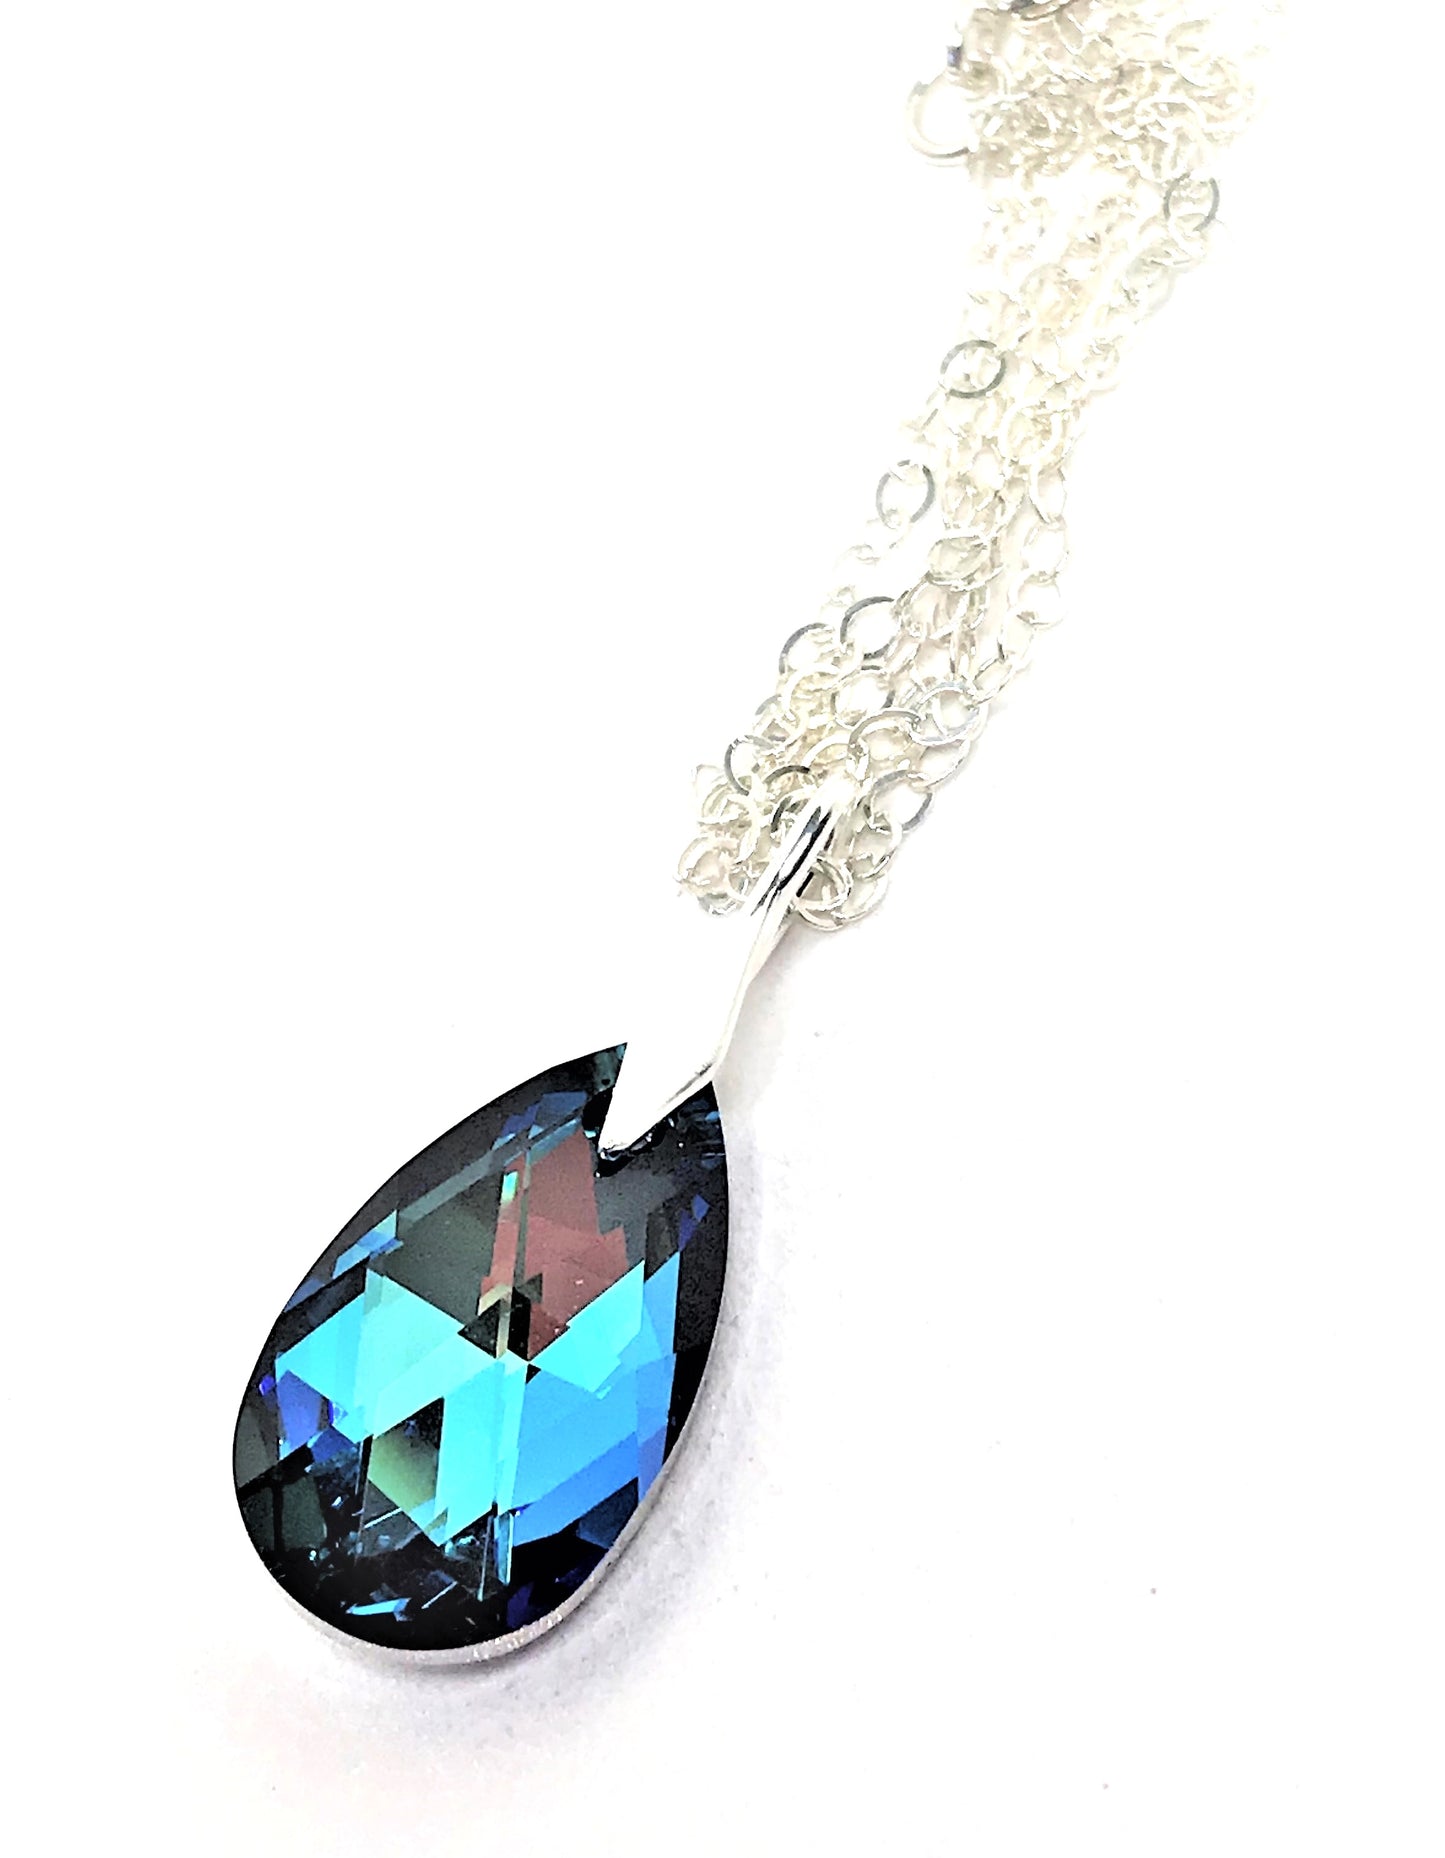 Bermuda Blue Austrian Crystal Pendant | 925 Sterling Silver | Blue Teardrop Crystal Necklace for Women